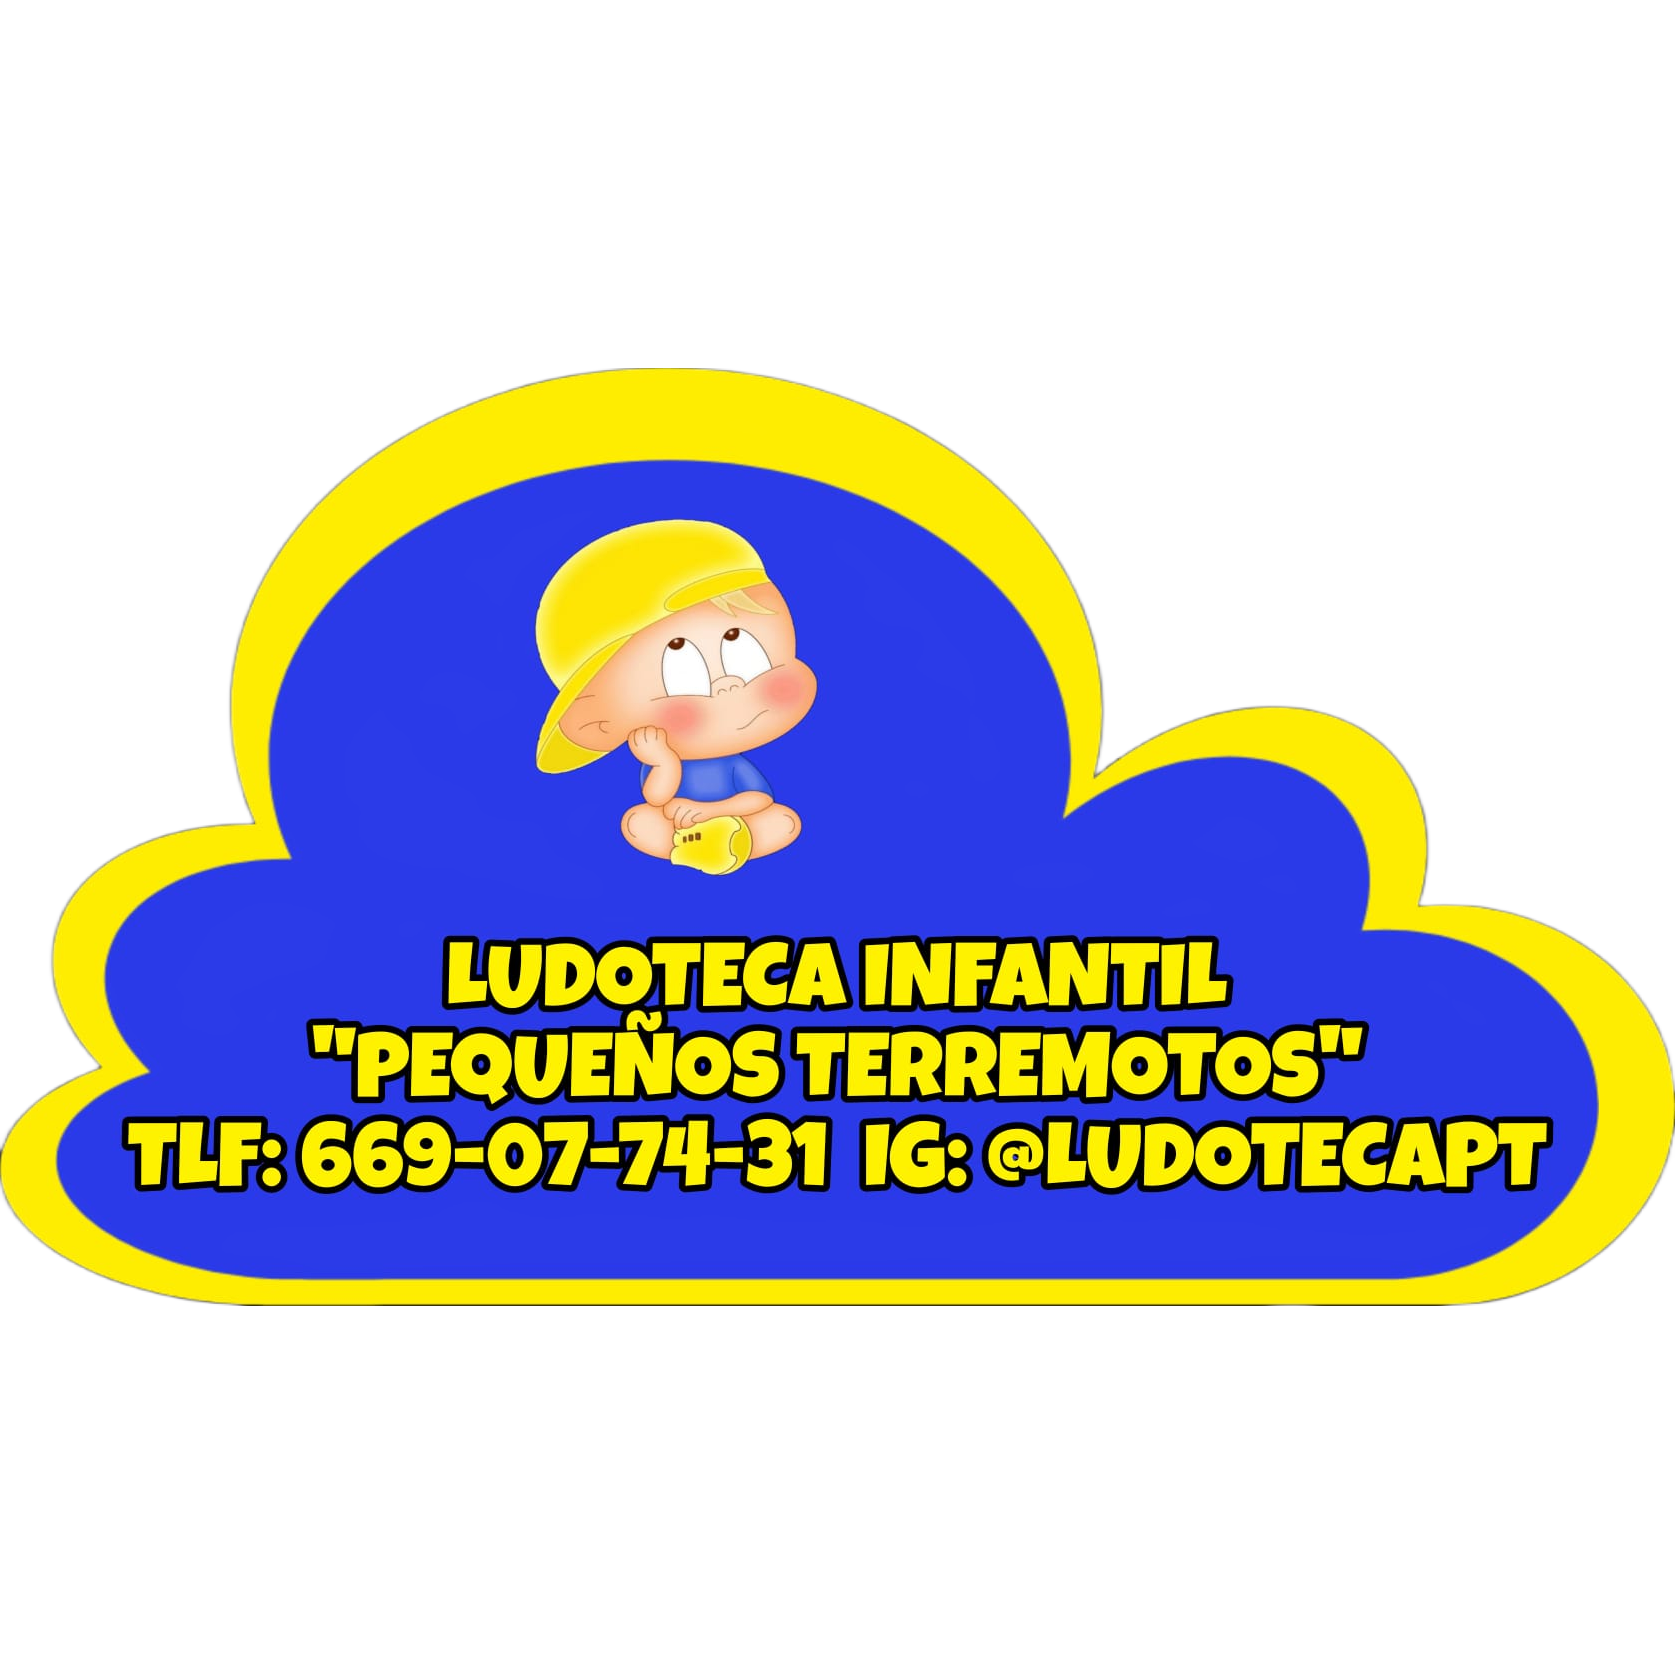 Ludoteca Infantil "Pequeños Terremotos" Logo